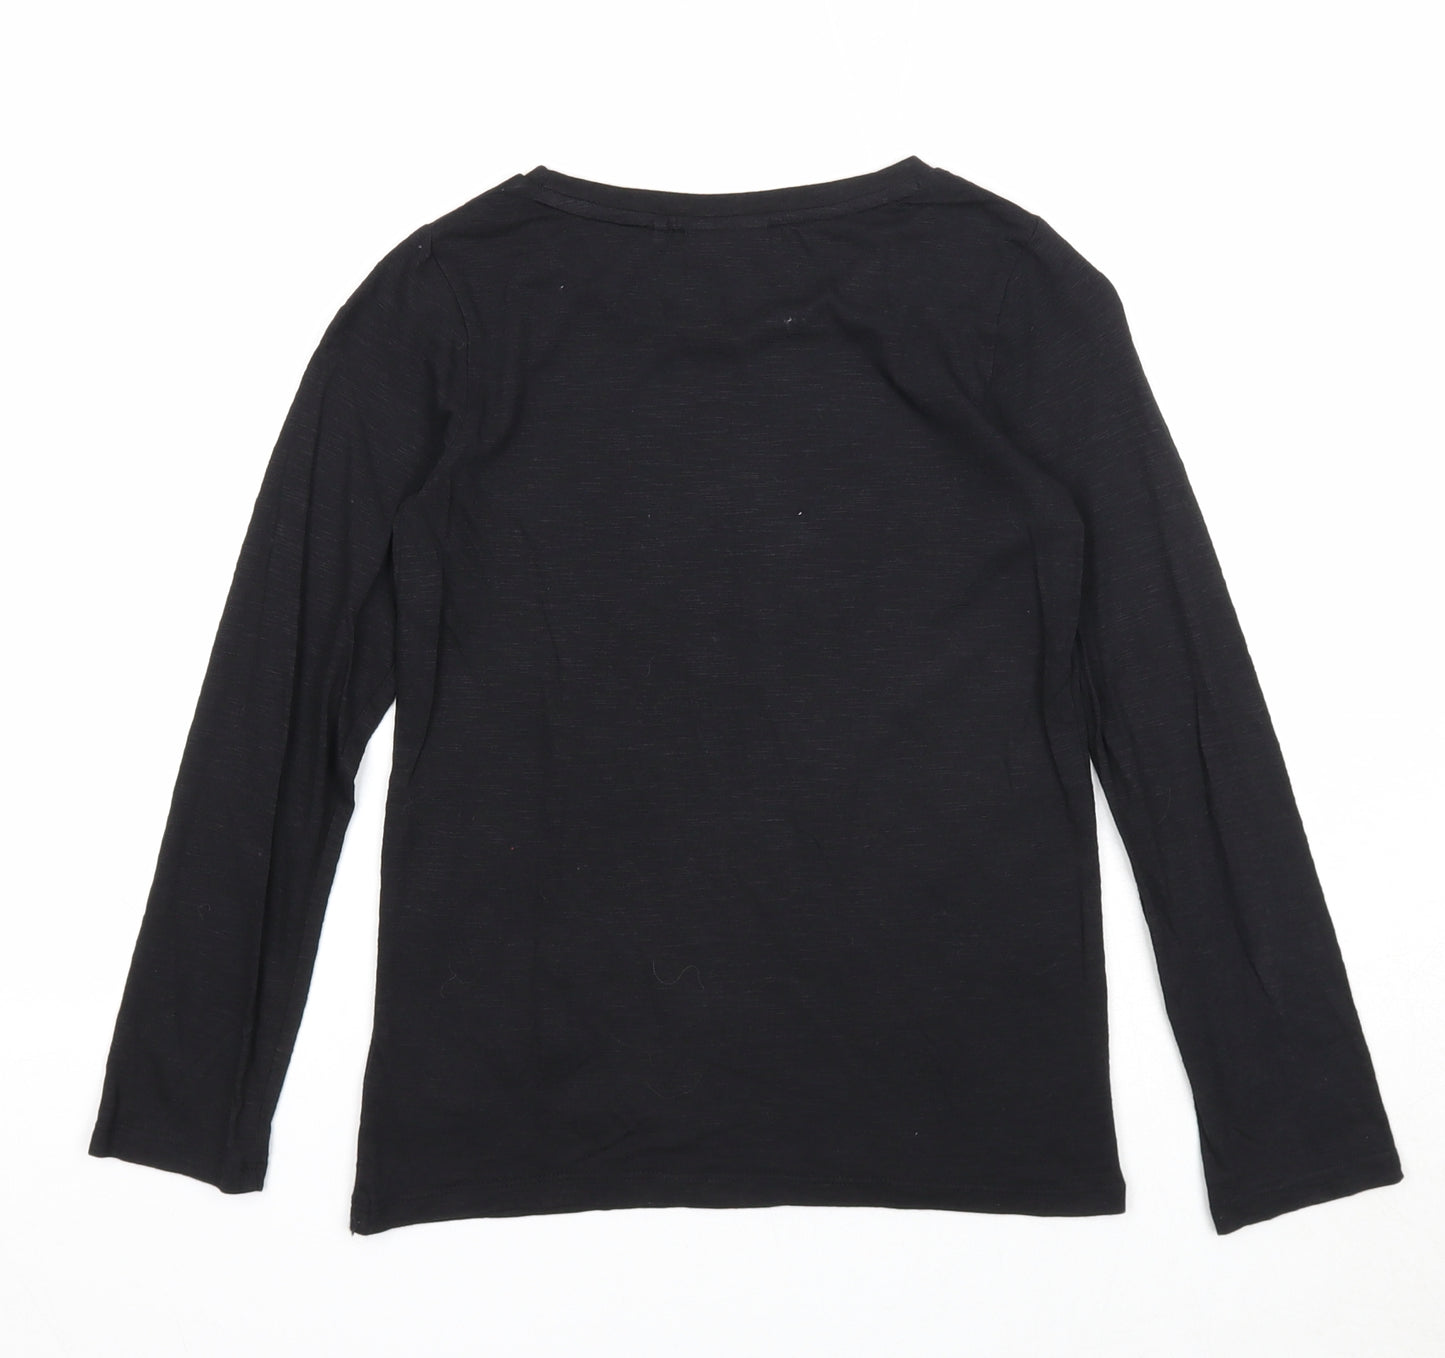 NEXT Girls Black Cotton Basic T-Shirt Size 8 Years Round Neck Pullover - Hearts